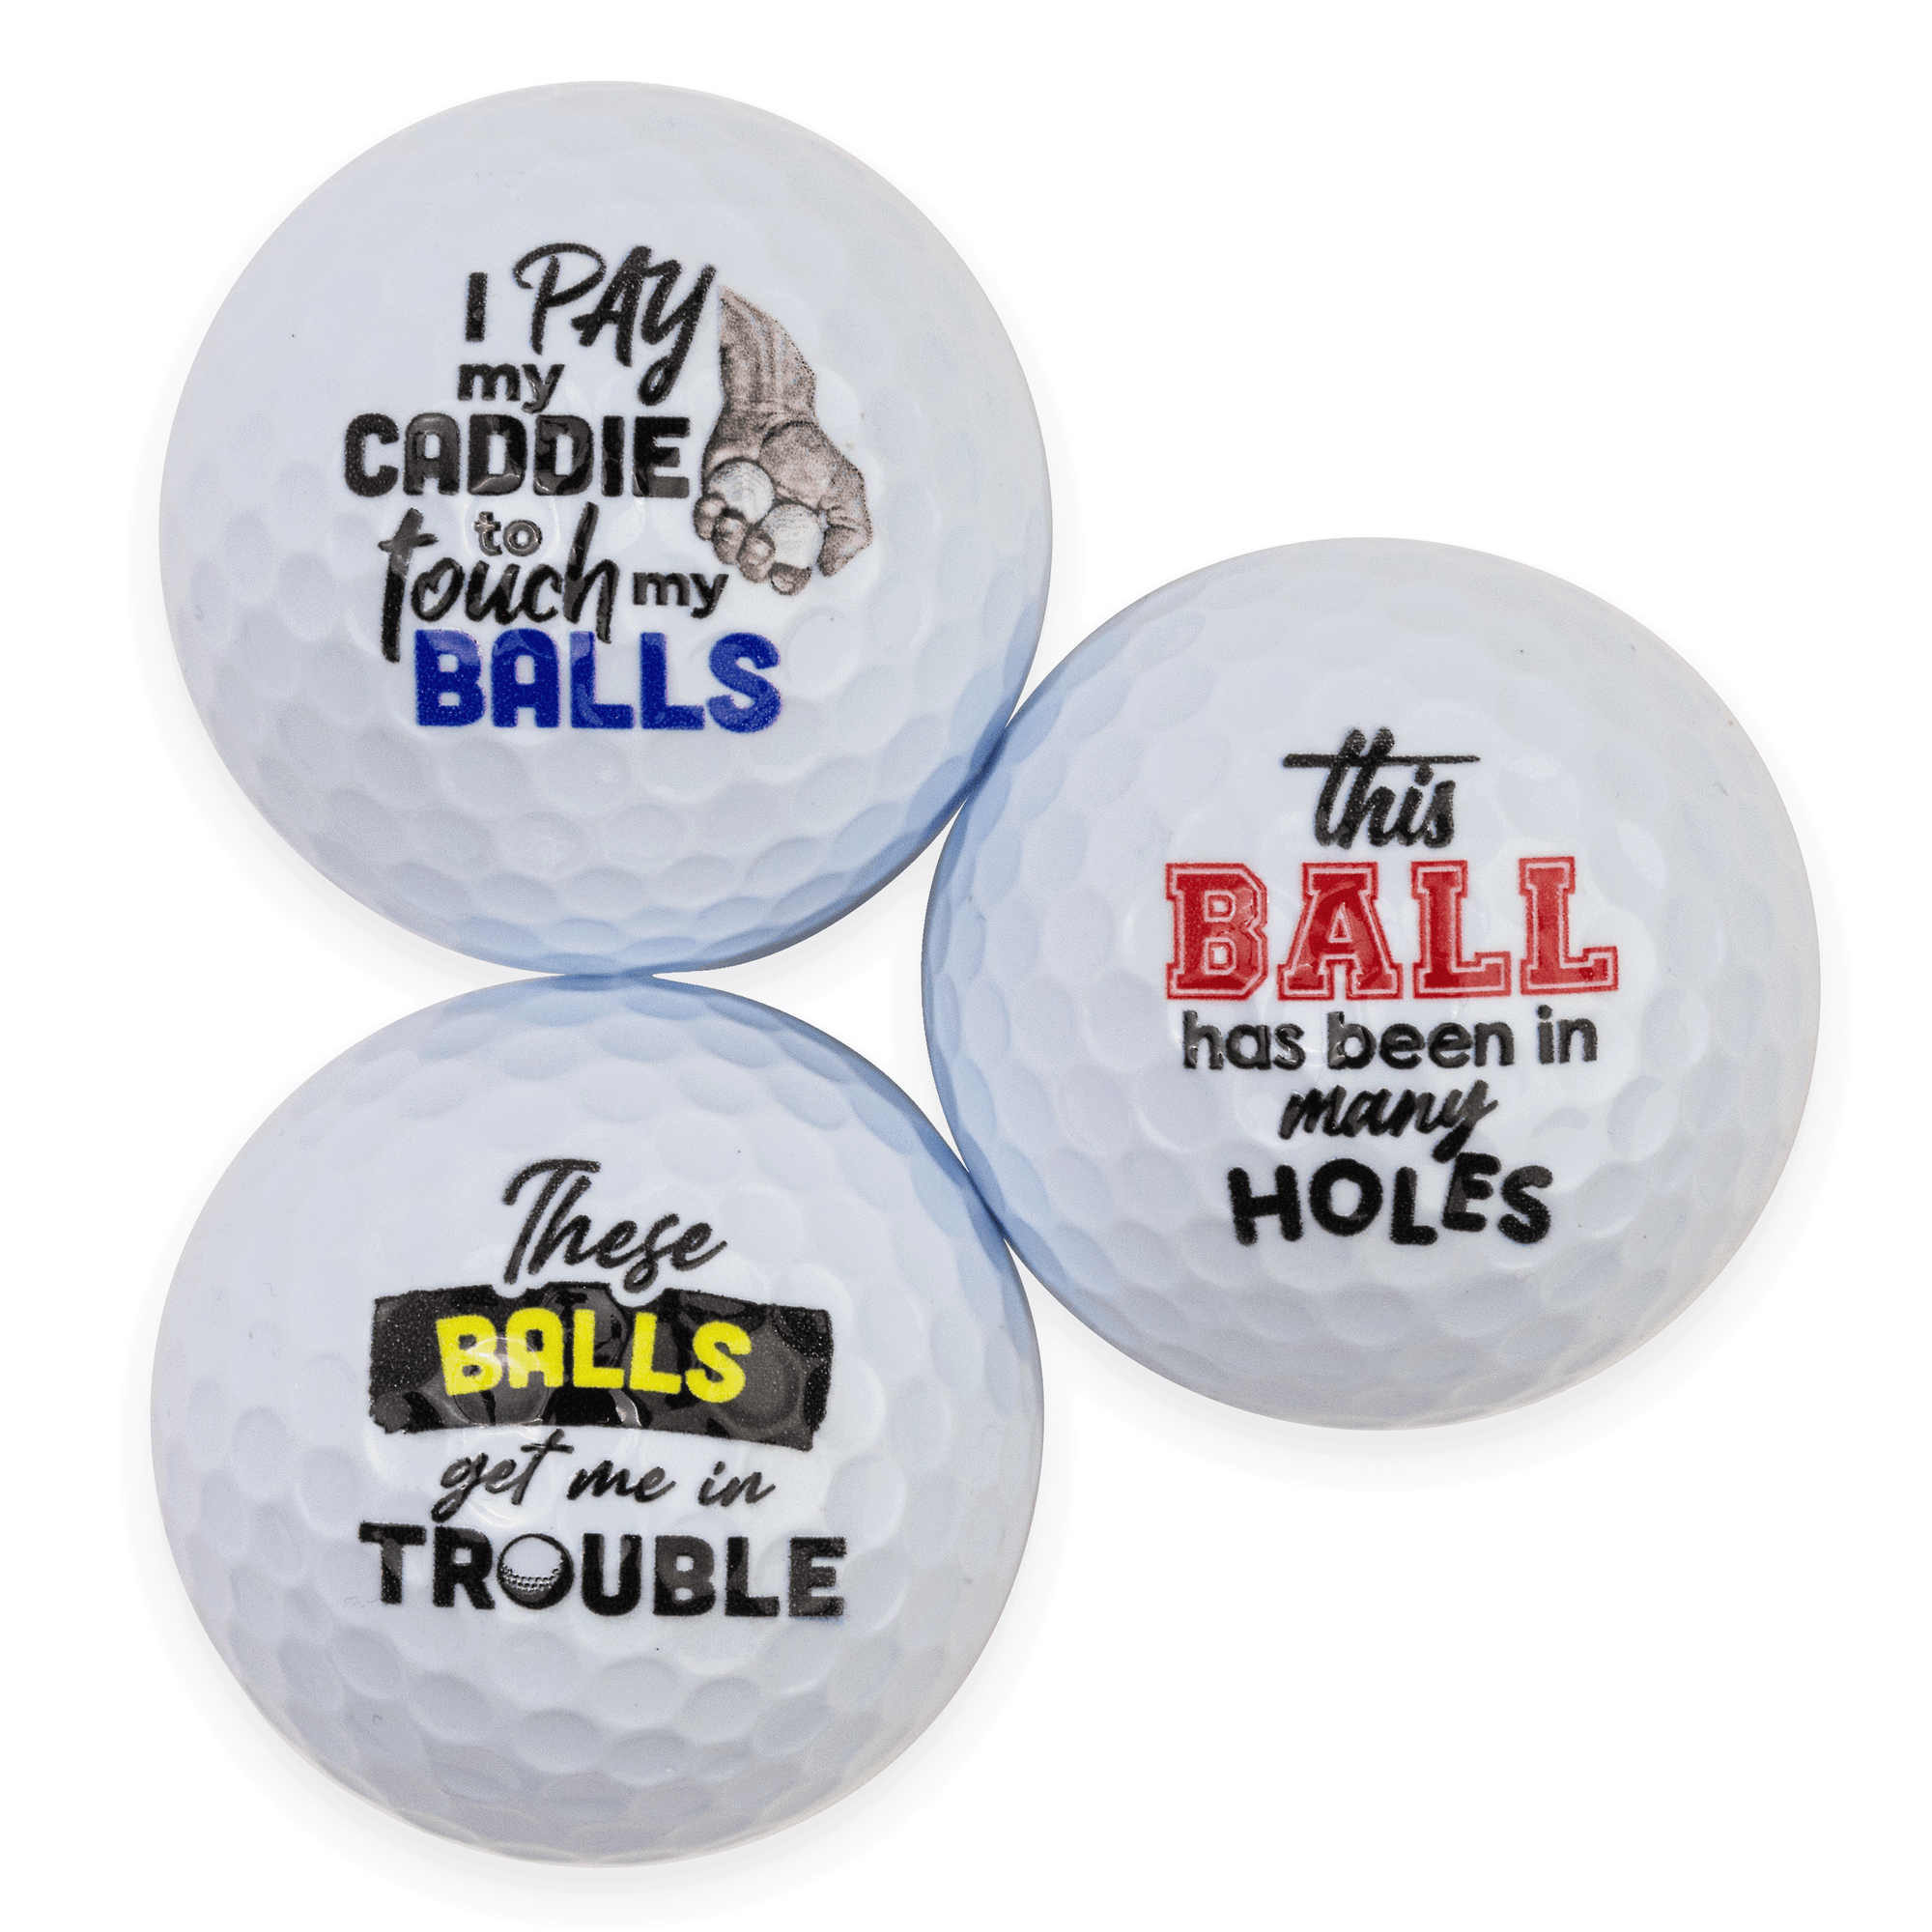 Funny golf terms golf balls, Zazzle